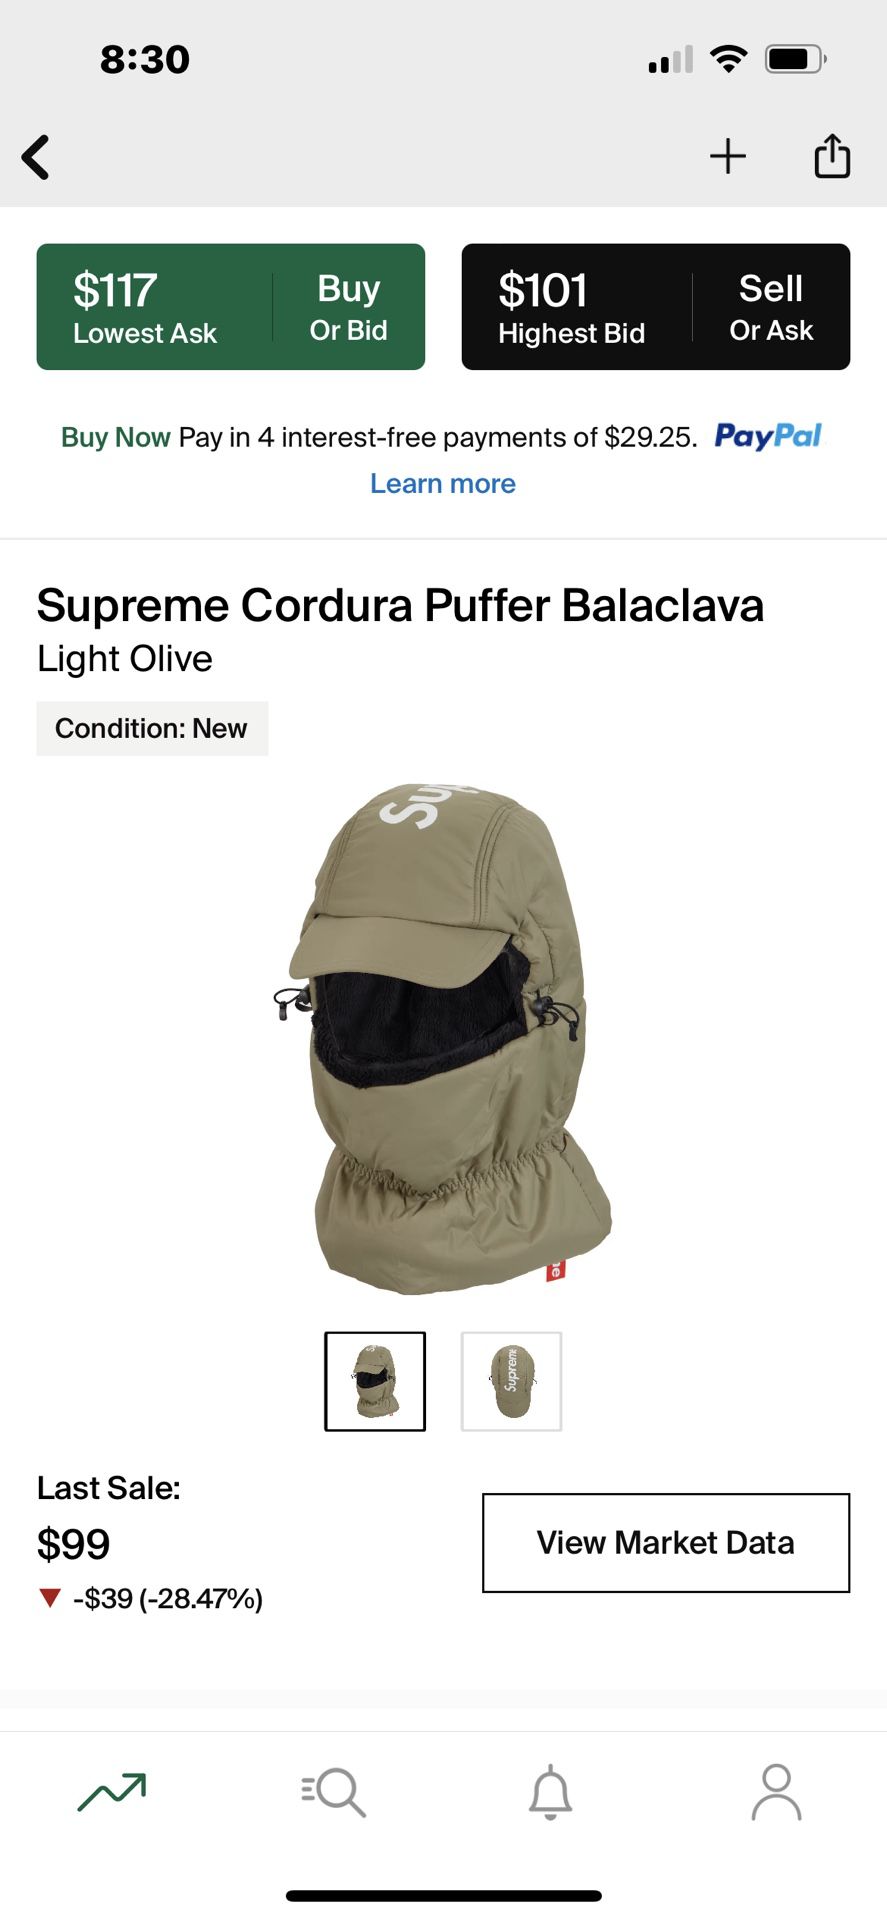 Supreme Cordura Puffer Balaclava Light Olive Confirmed 